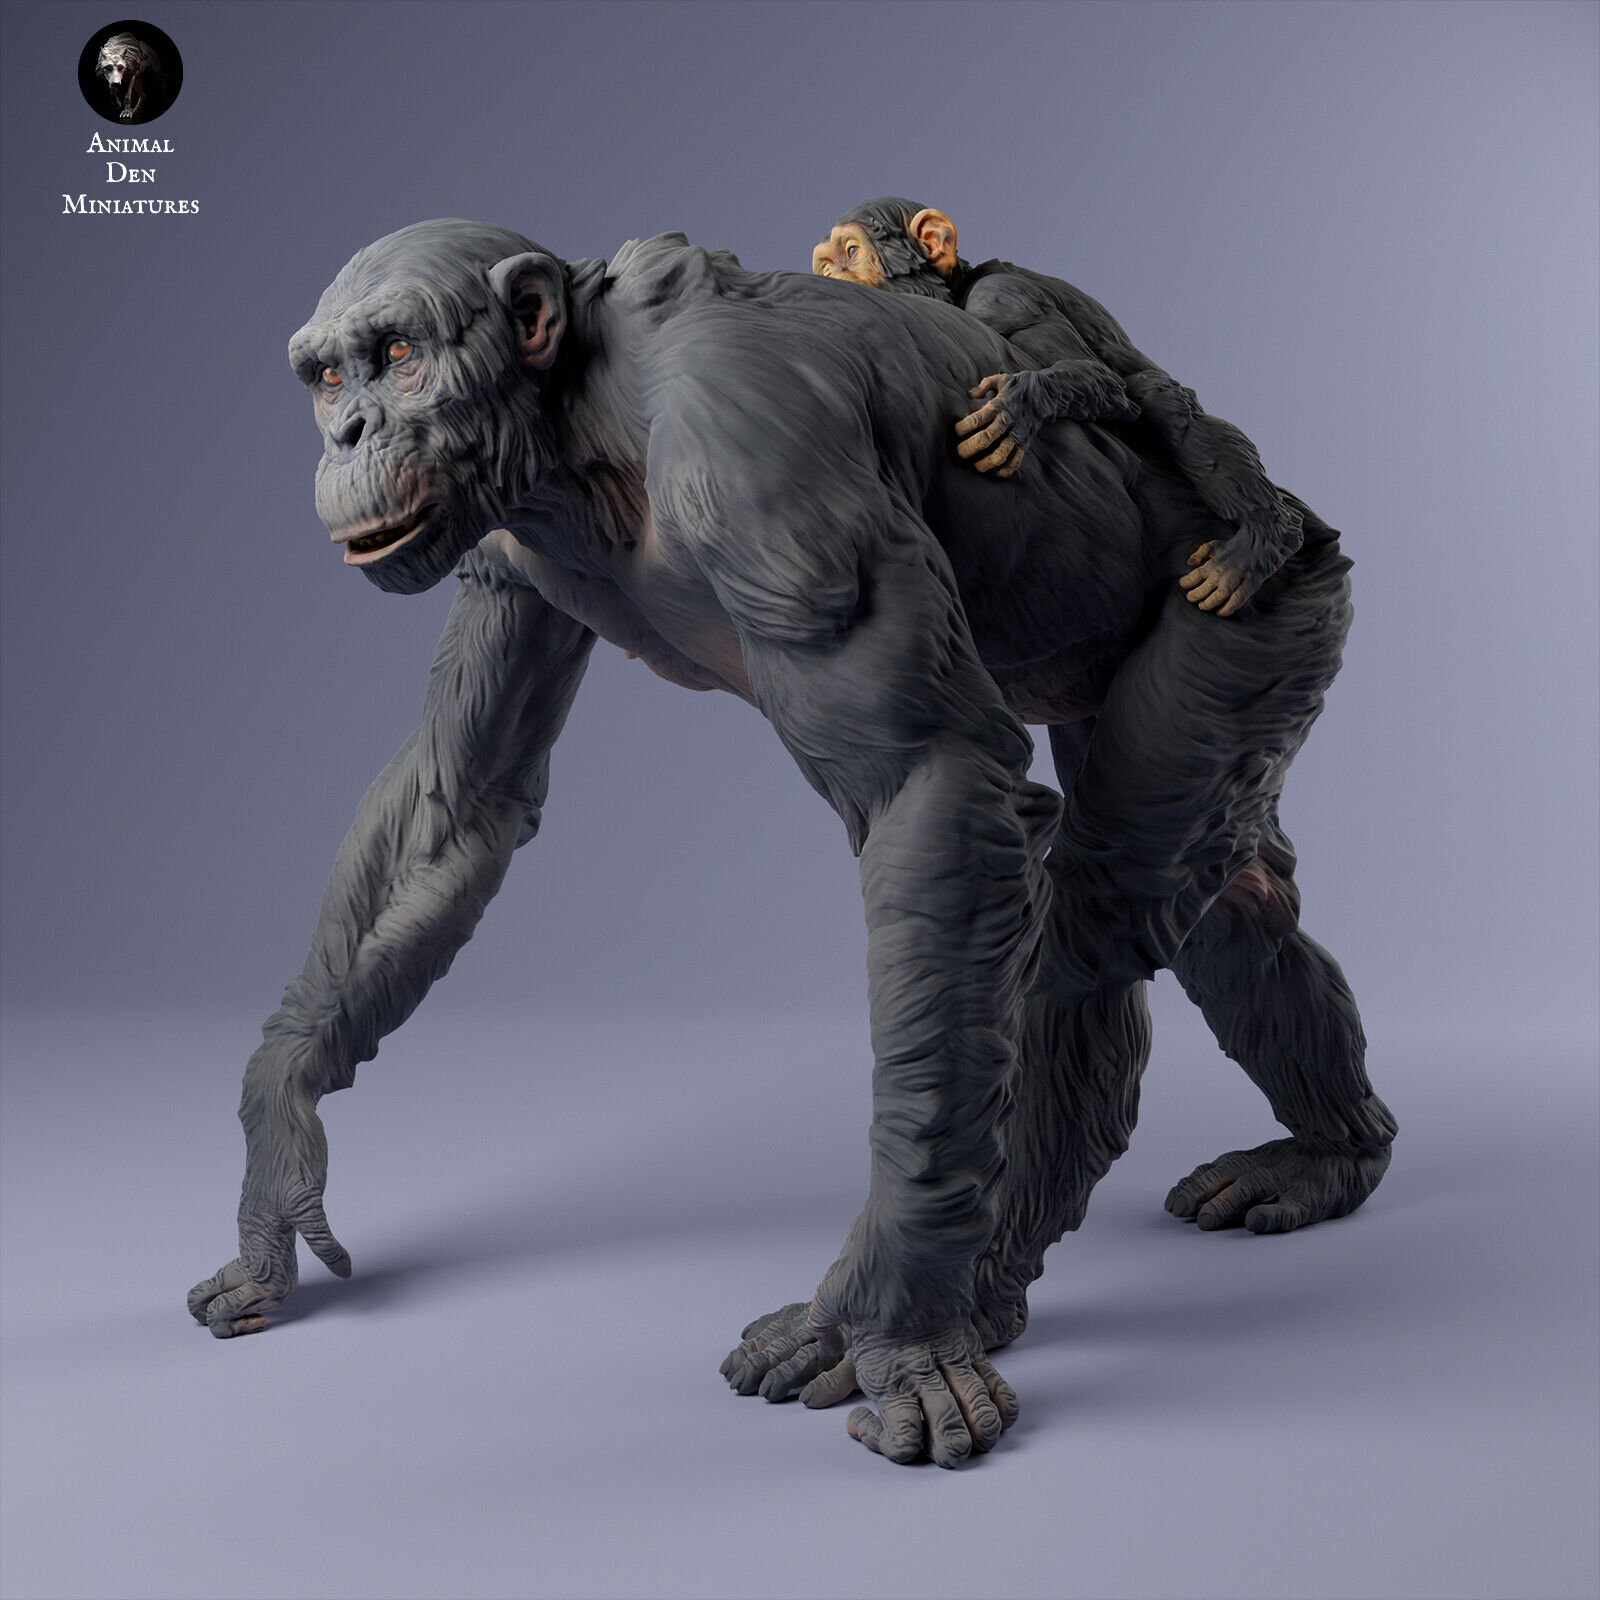 Breyer size artist resin companion animal figurine female chimpanzee with baby